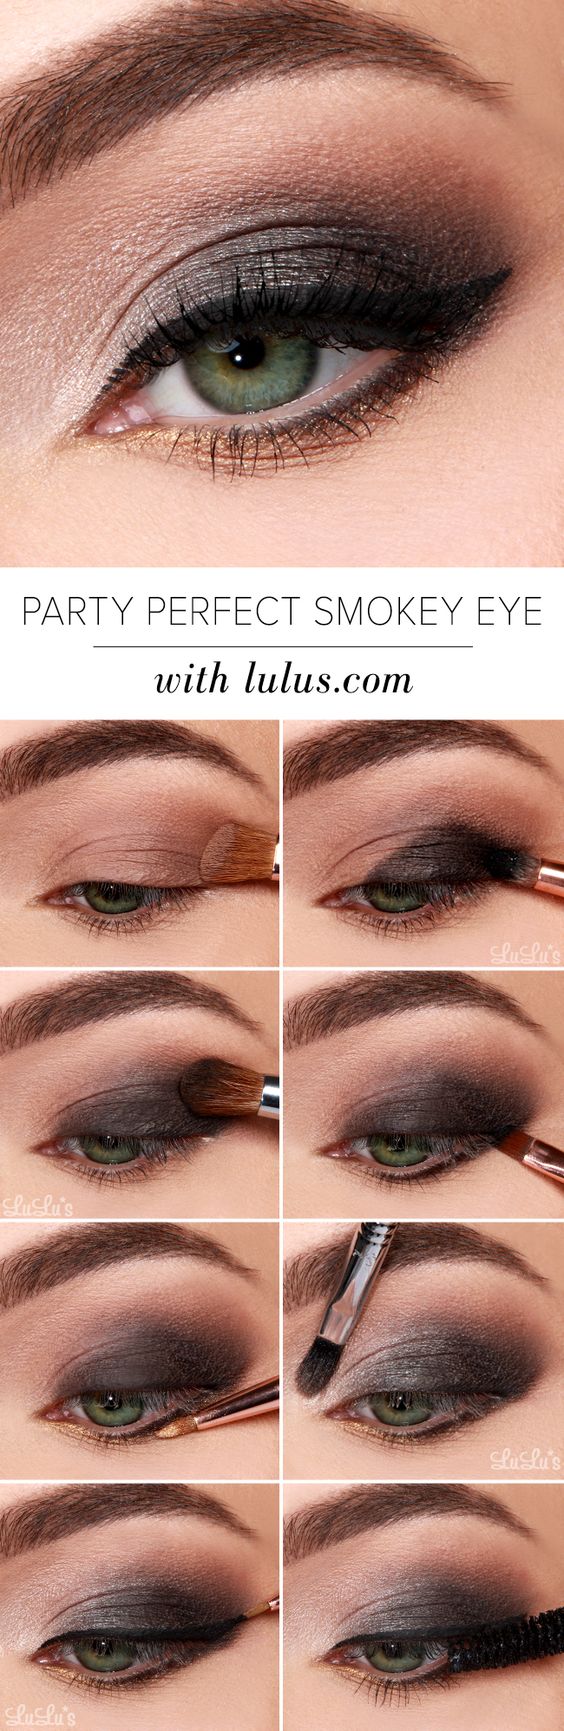 40 Hottest Smokey Eye Makeup Ideas 2018 Smokey Eye Tutorials For